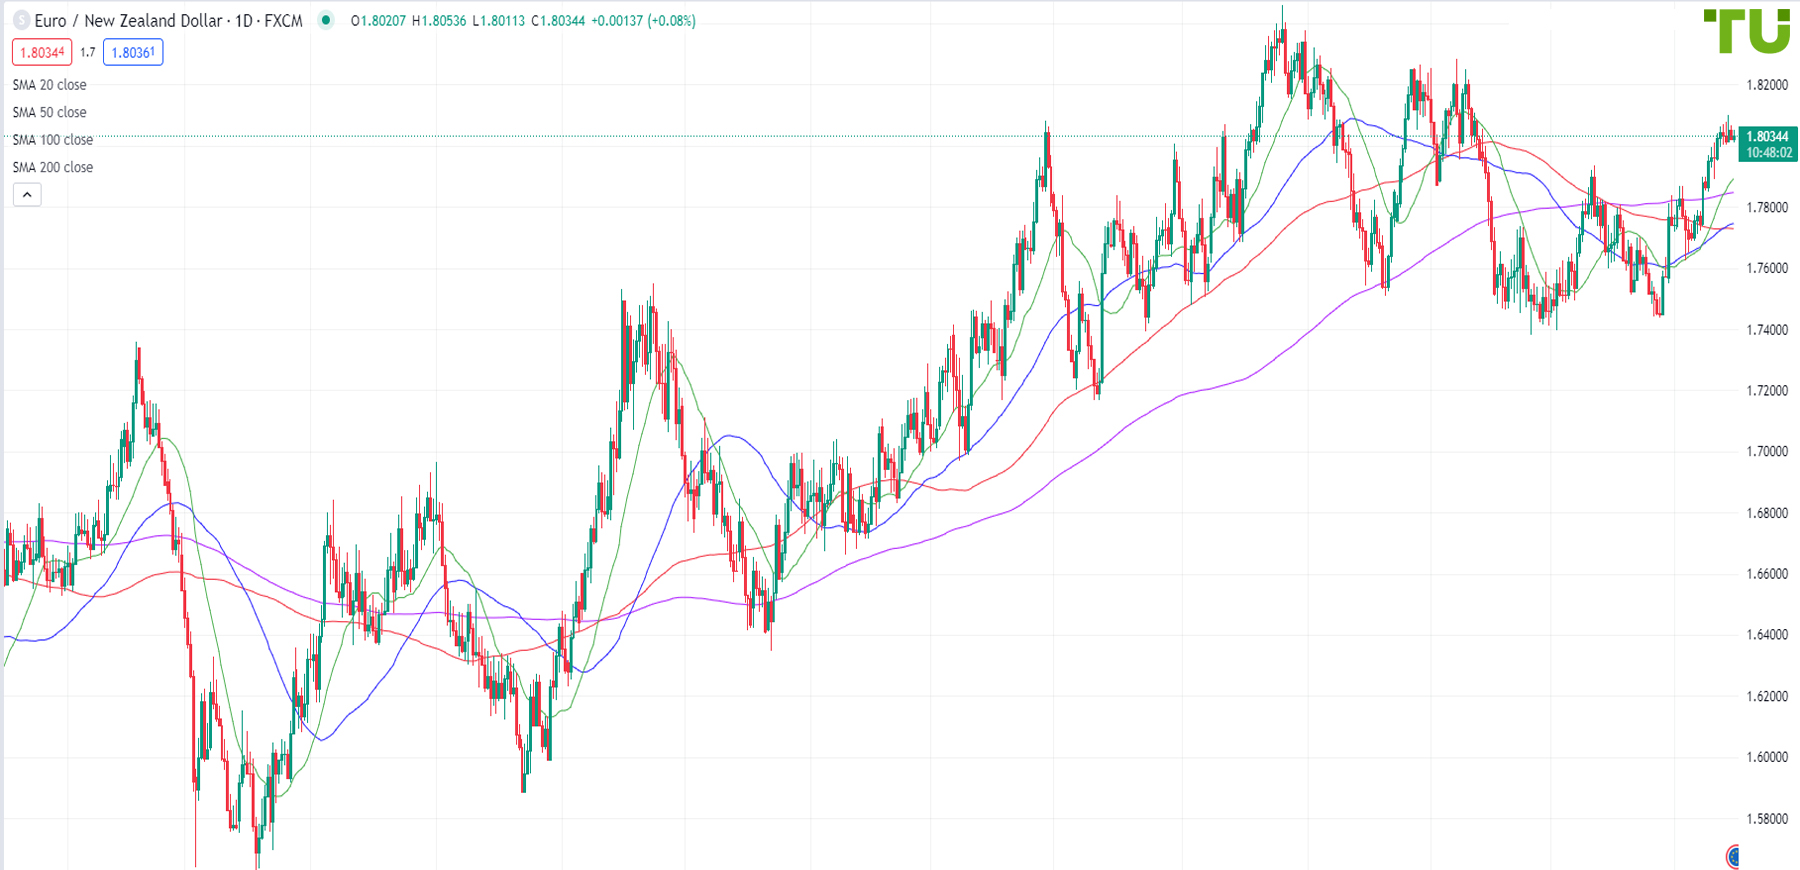 Euro/Kiwi is under moderate pressure